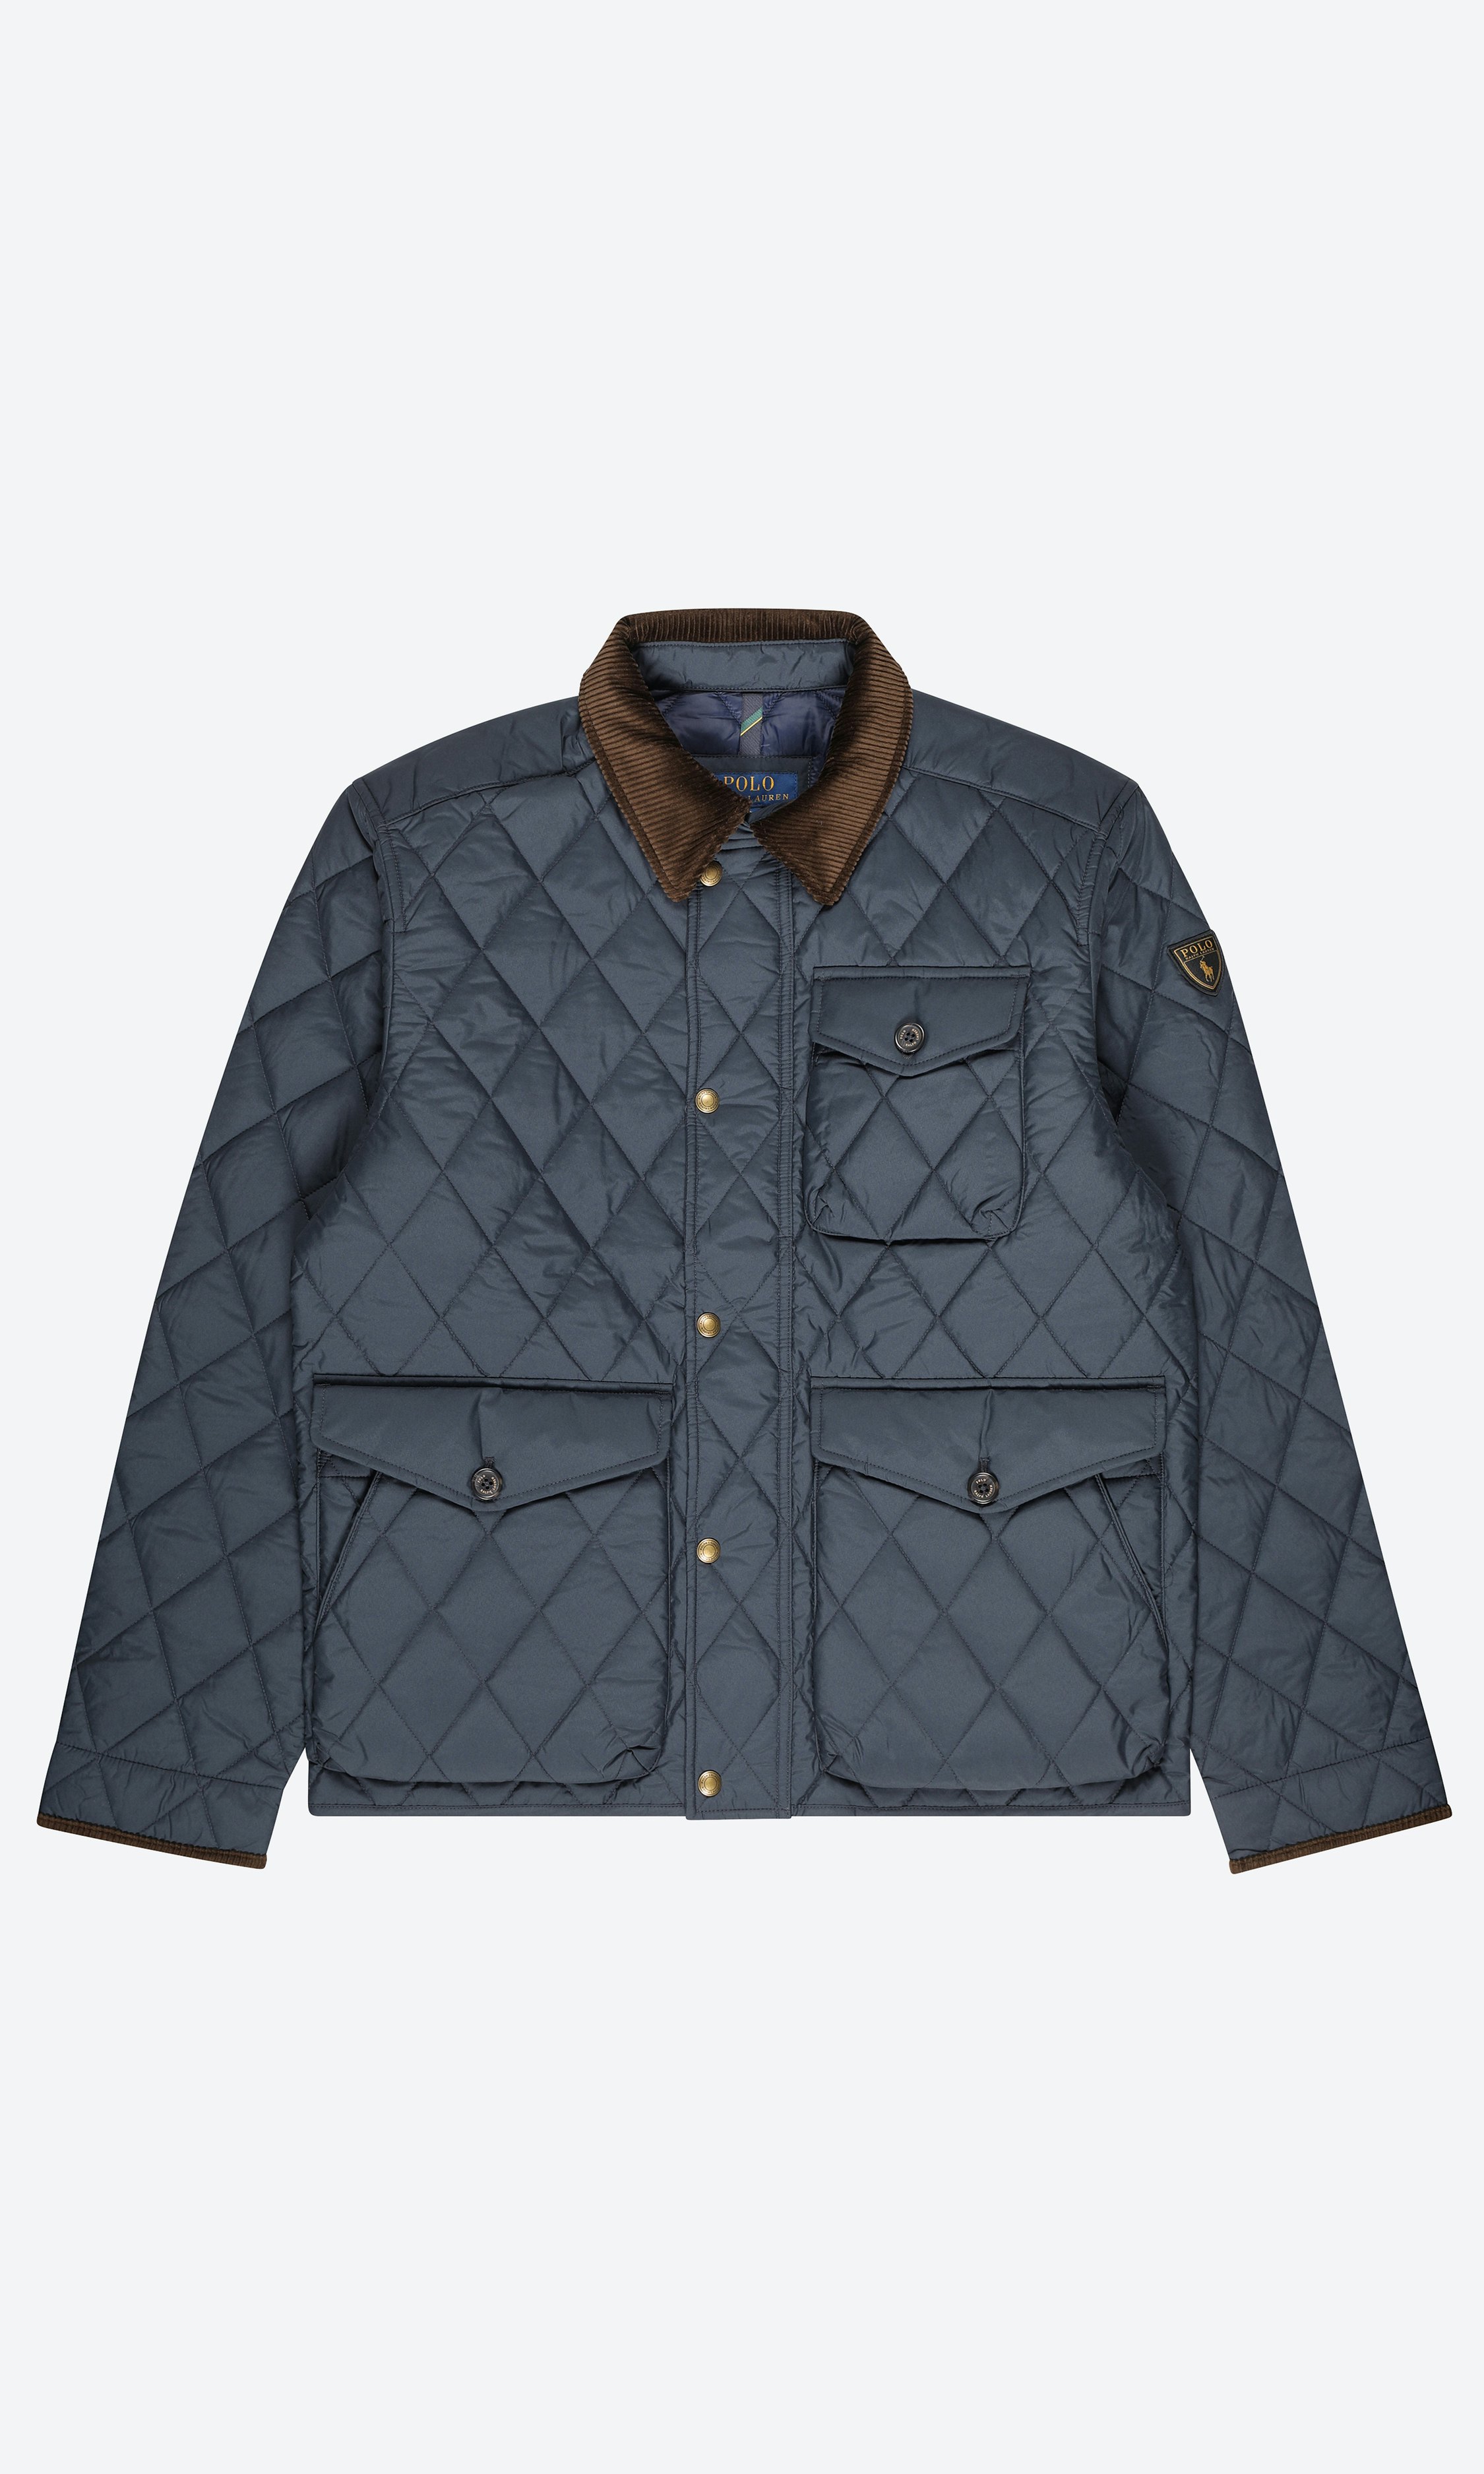 Polo Ralph Lauren Men's Primaloft Insulated Quilted Jacket (2XLarge, Navy)  